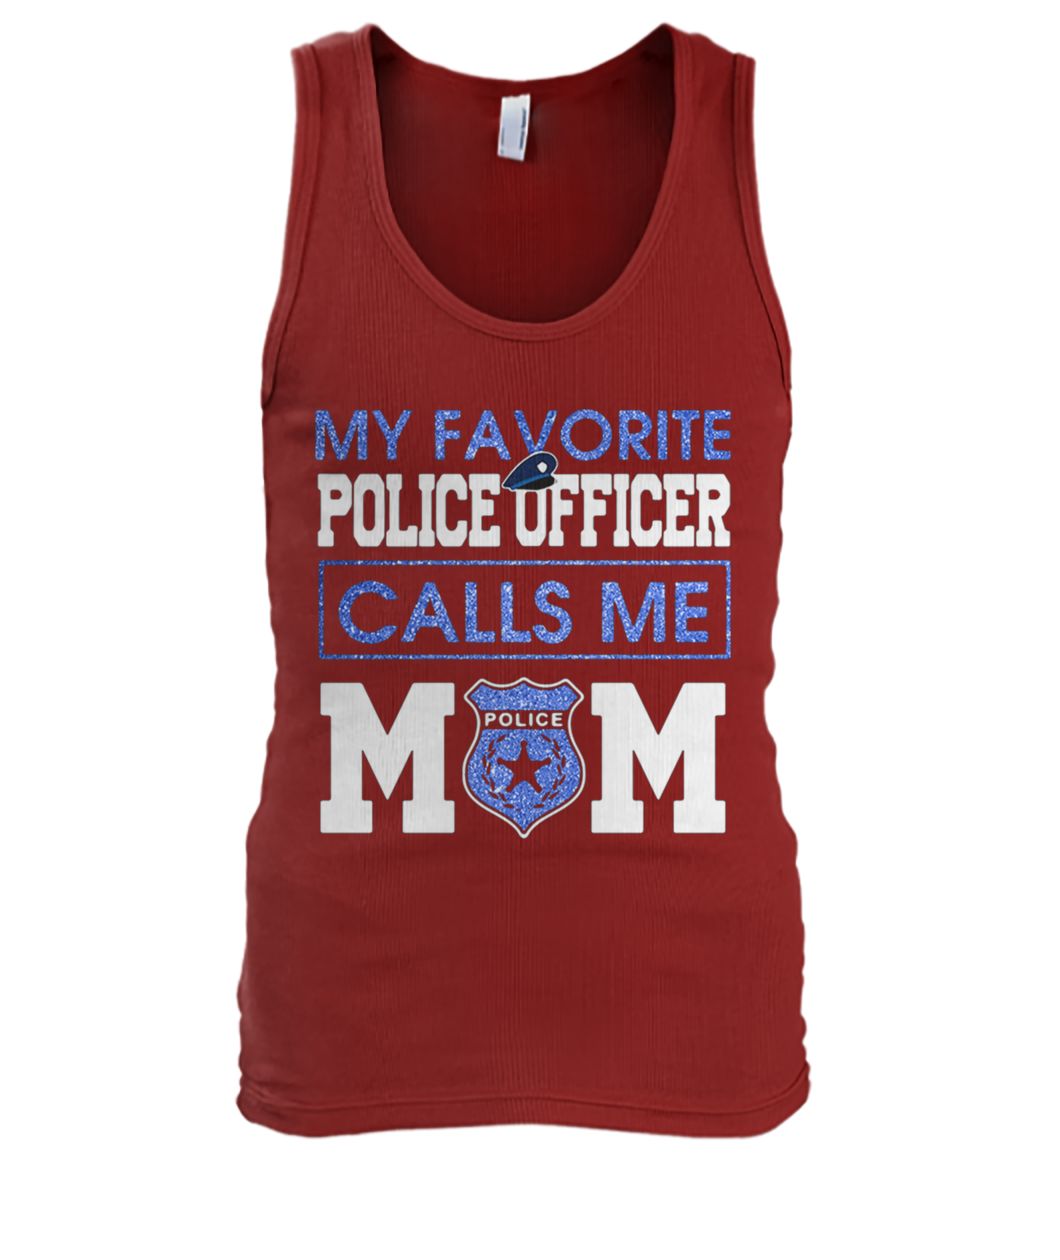 My favorite police officer calls me mom men's tank top